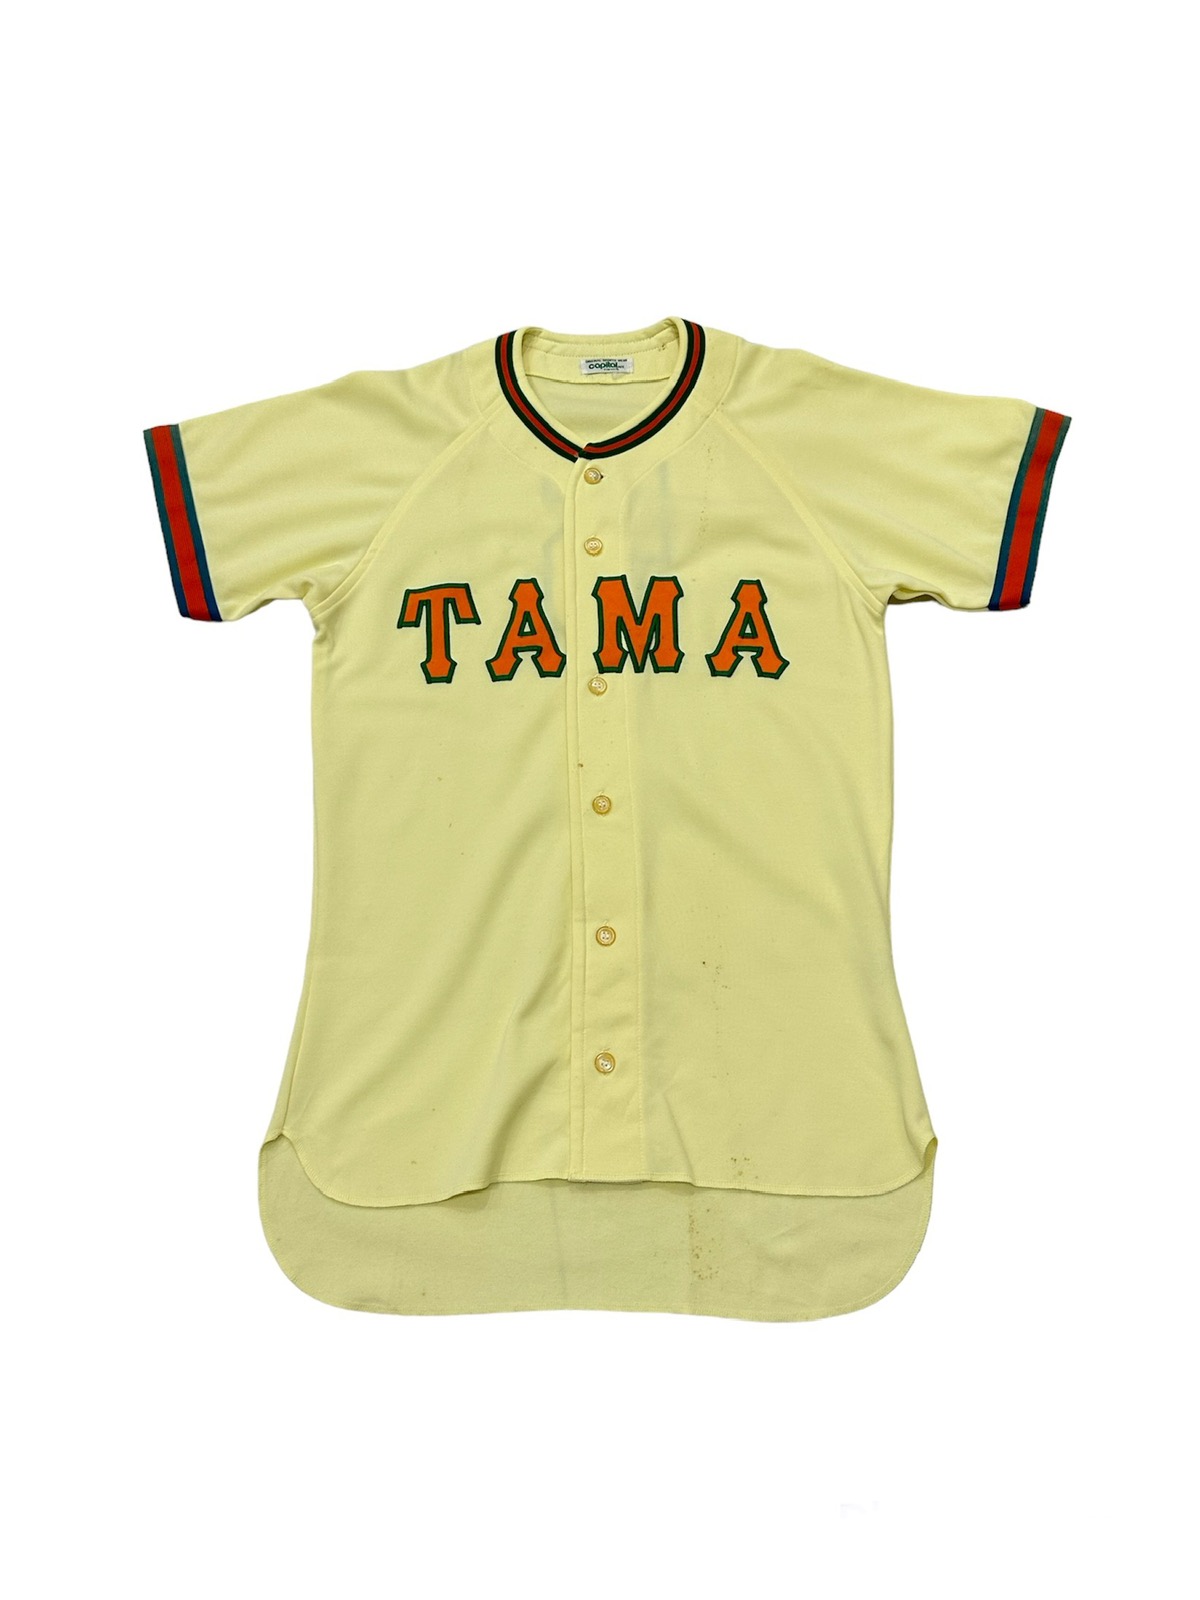 Vintage - Vintage TAMA Baseball Jersey - 1